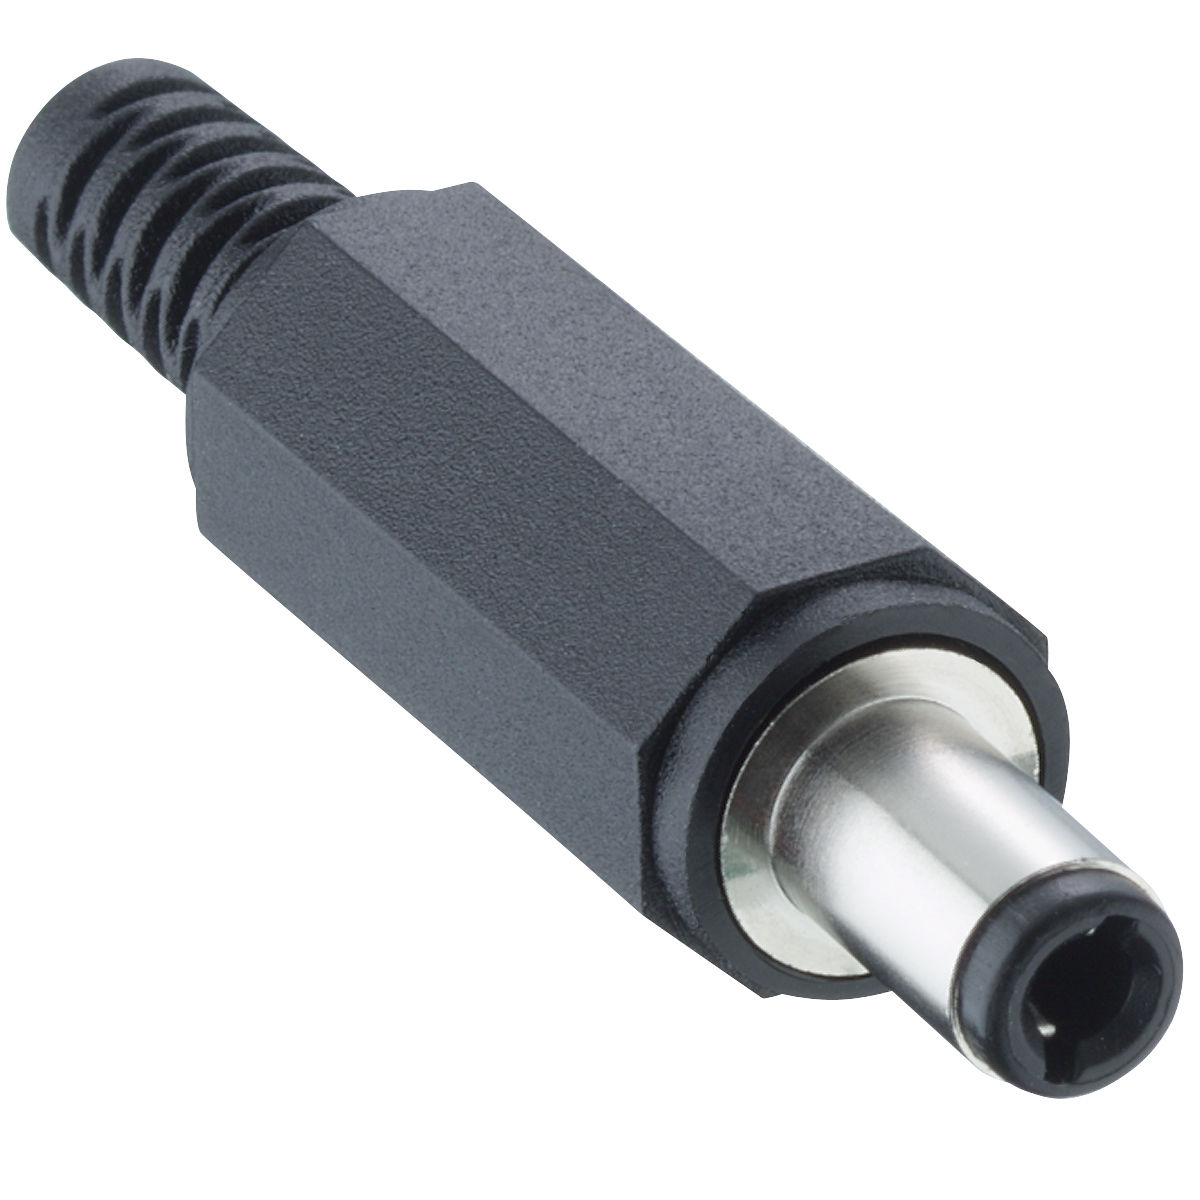 Lumberg: 1633 04 (Series 16 | Power supply connectors)